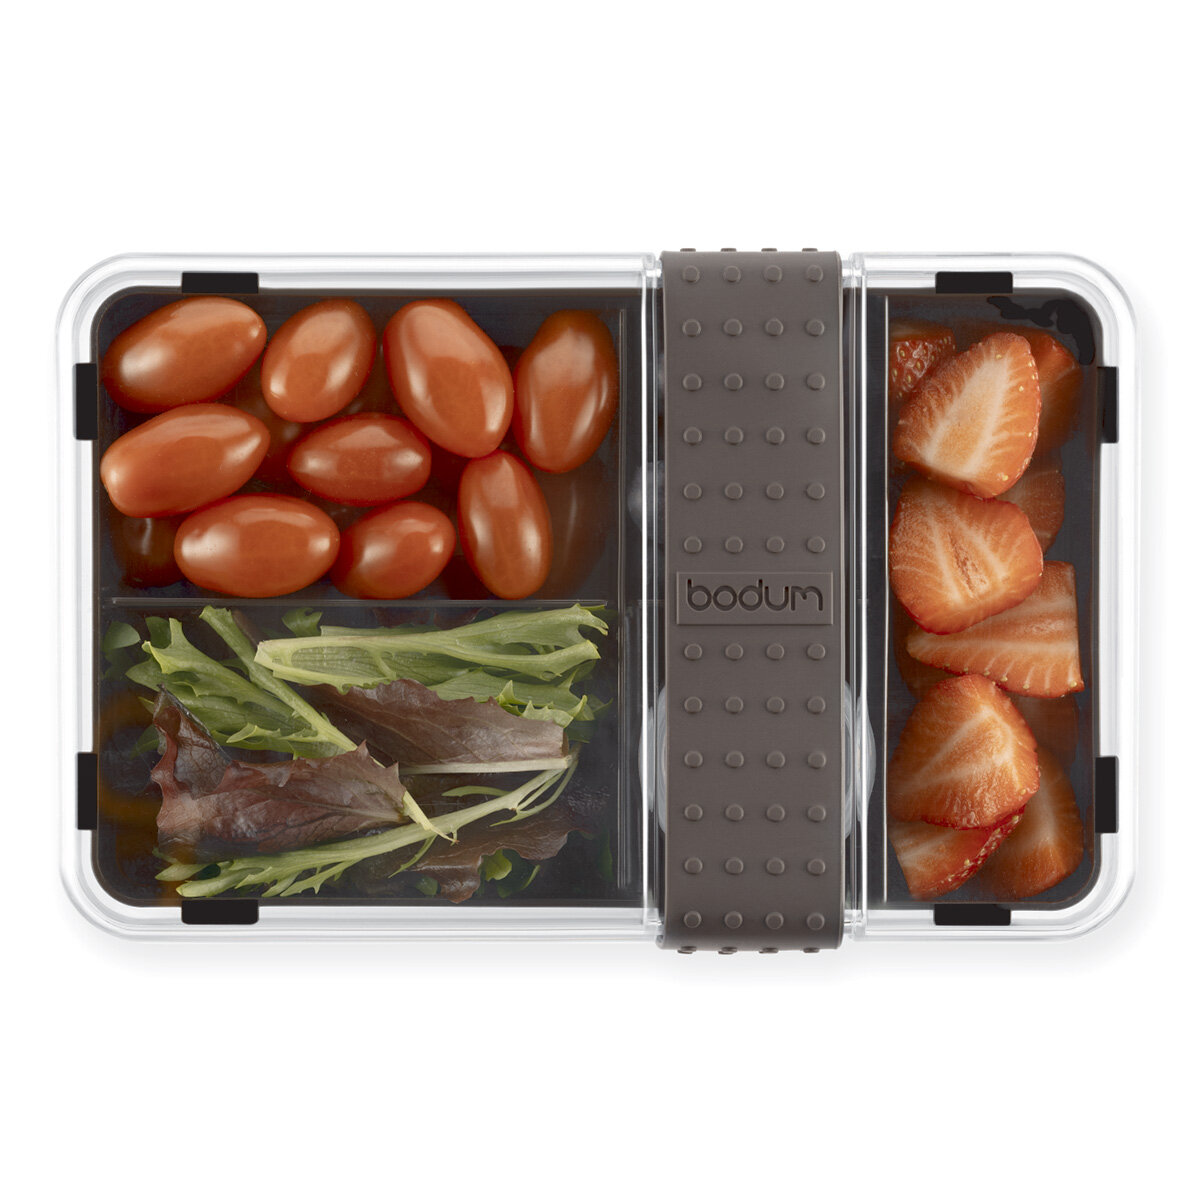 Bodum Lunch Box & Travel Mug (0.35L) Set